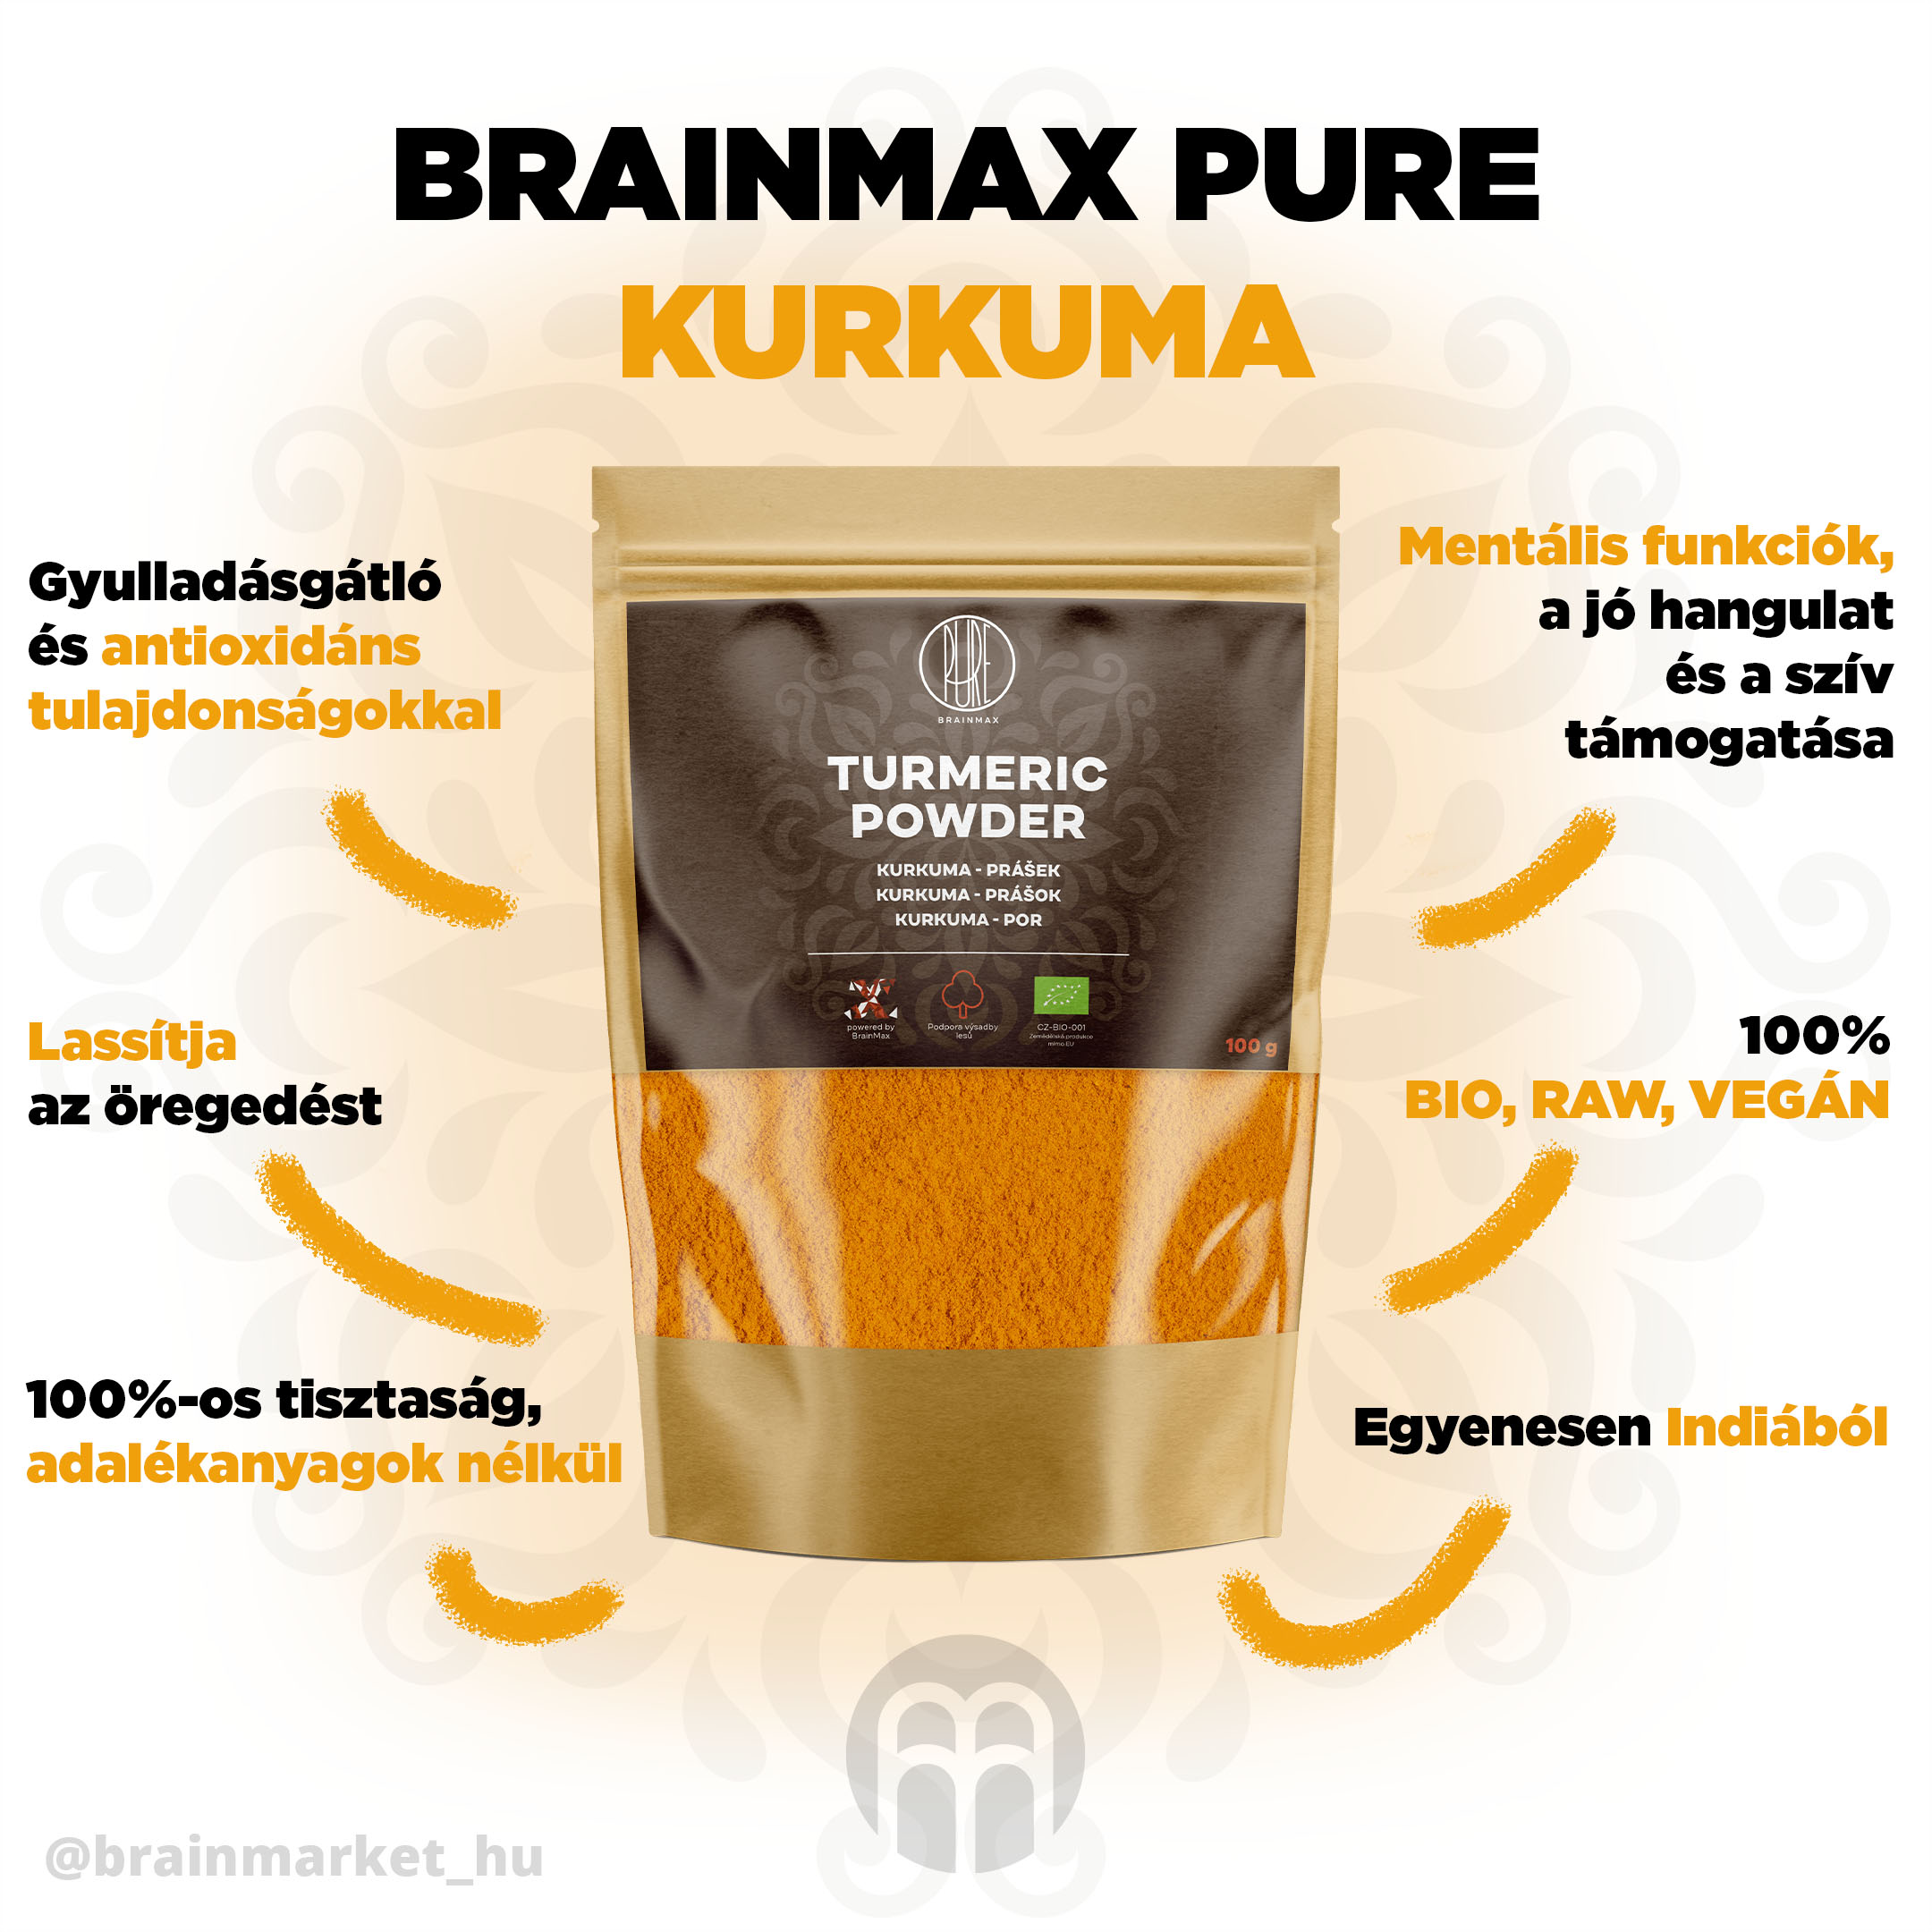 kurkuma-brainmax-pure-infographics-brainmarket-cz